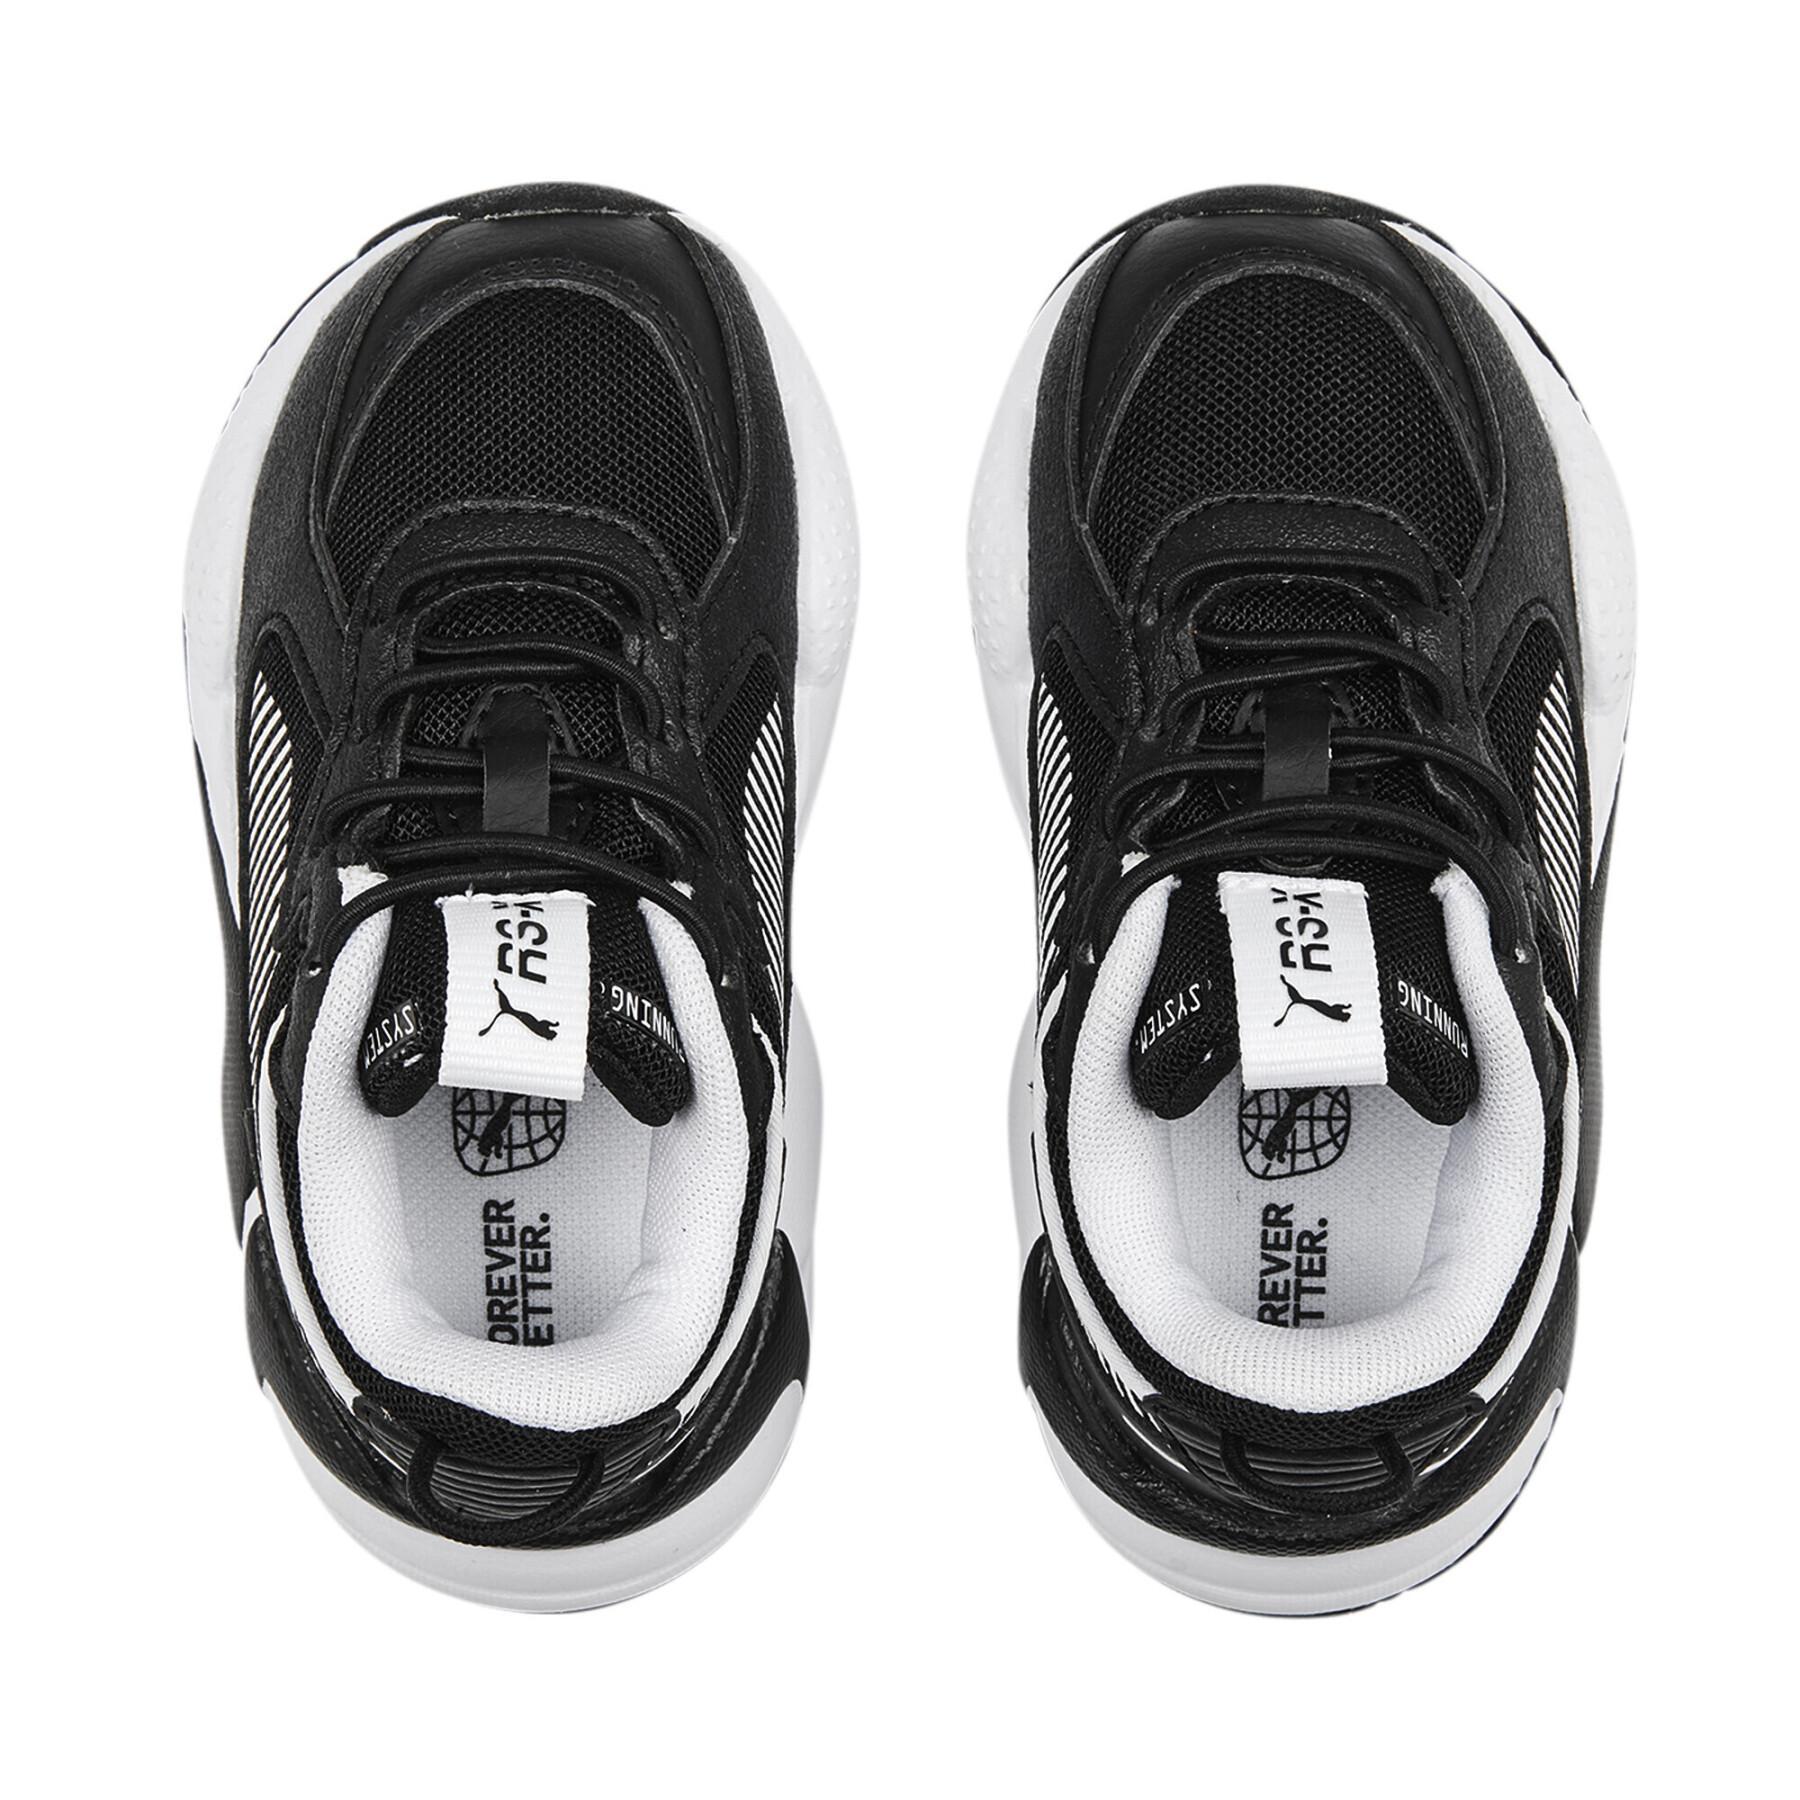 Baby sneakers Puma RS-X B&W AC